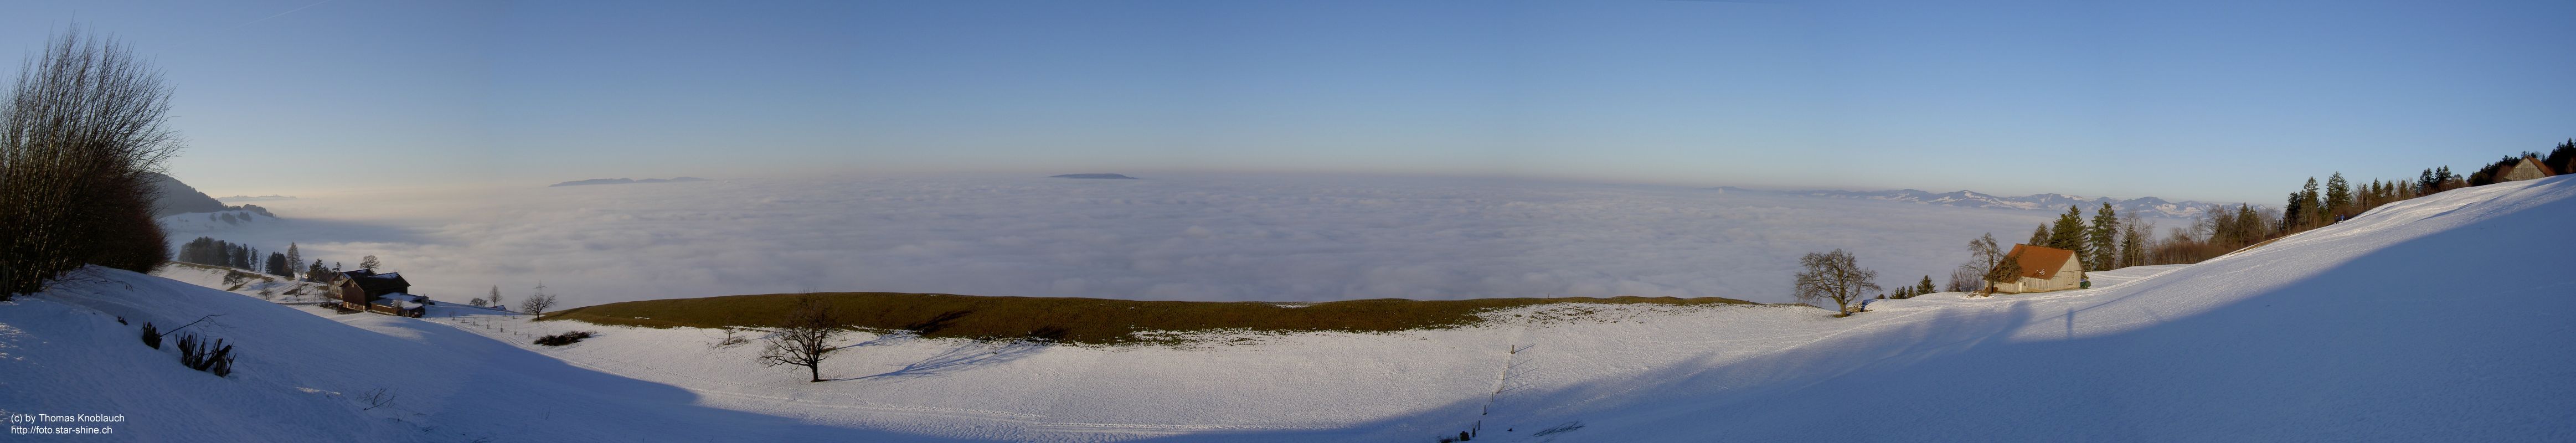 Sea of fog Panorama